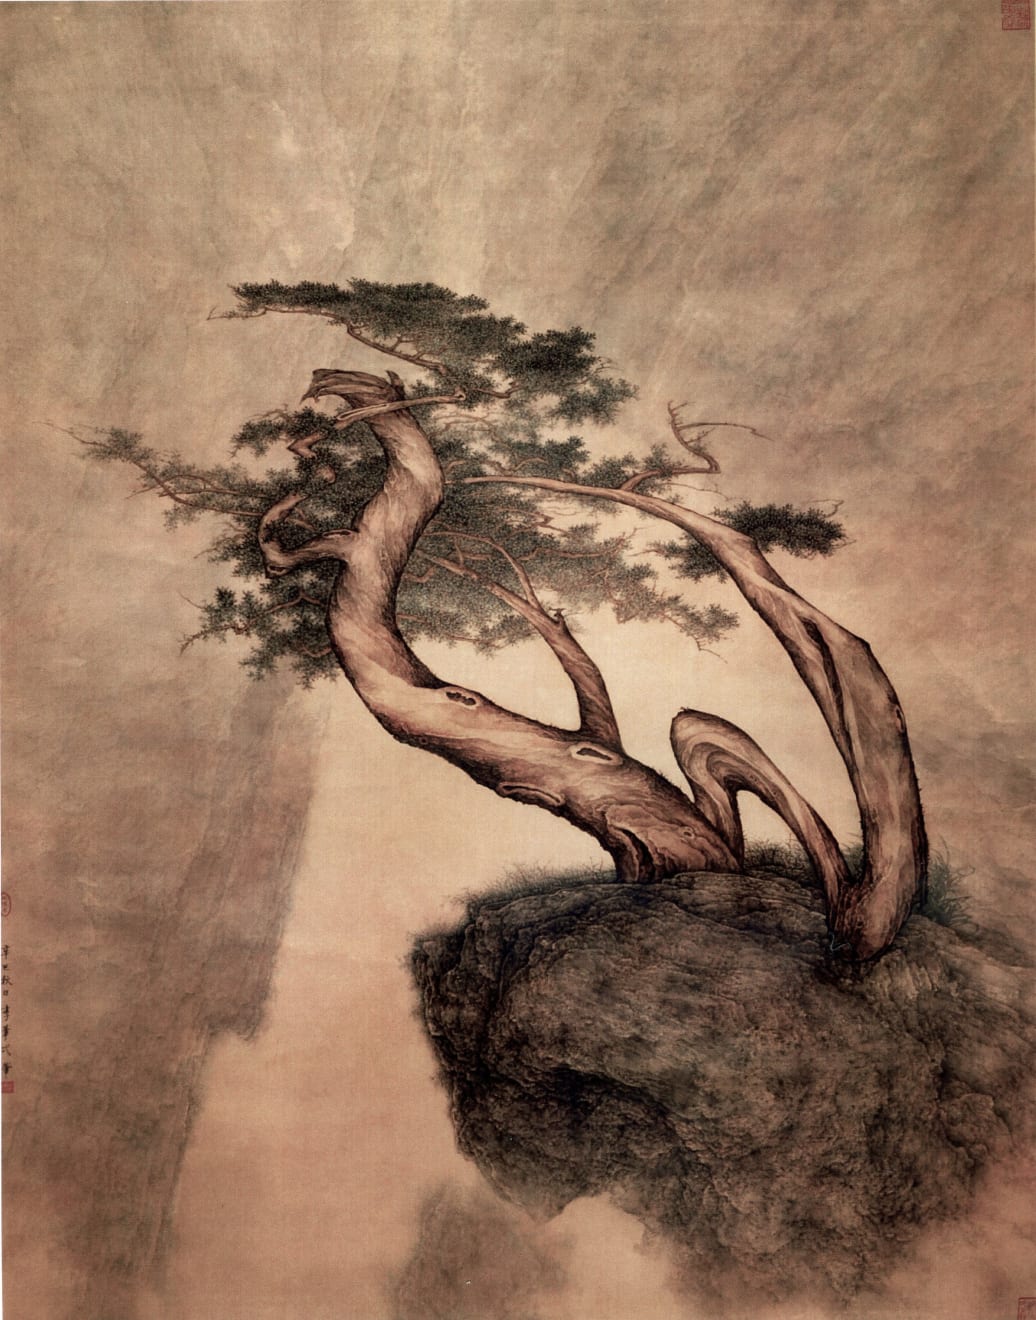 Li Huayi 李華弌, Old Pine《古松養志》, 2001